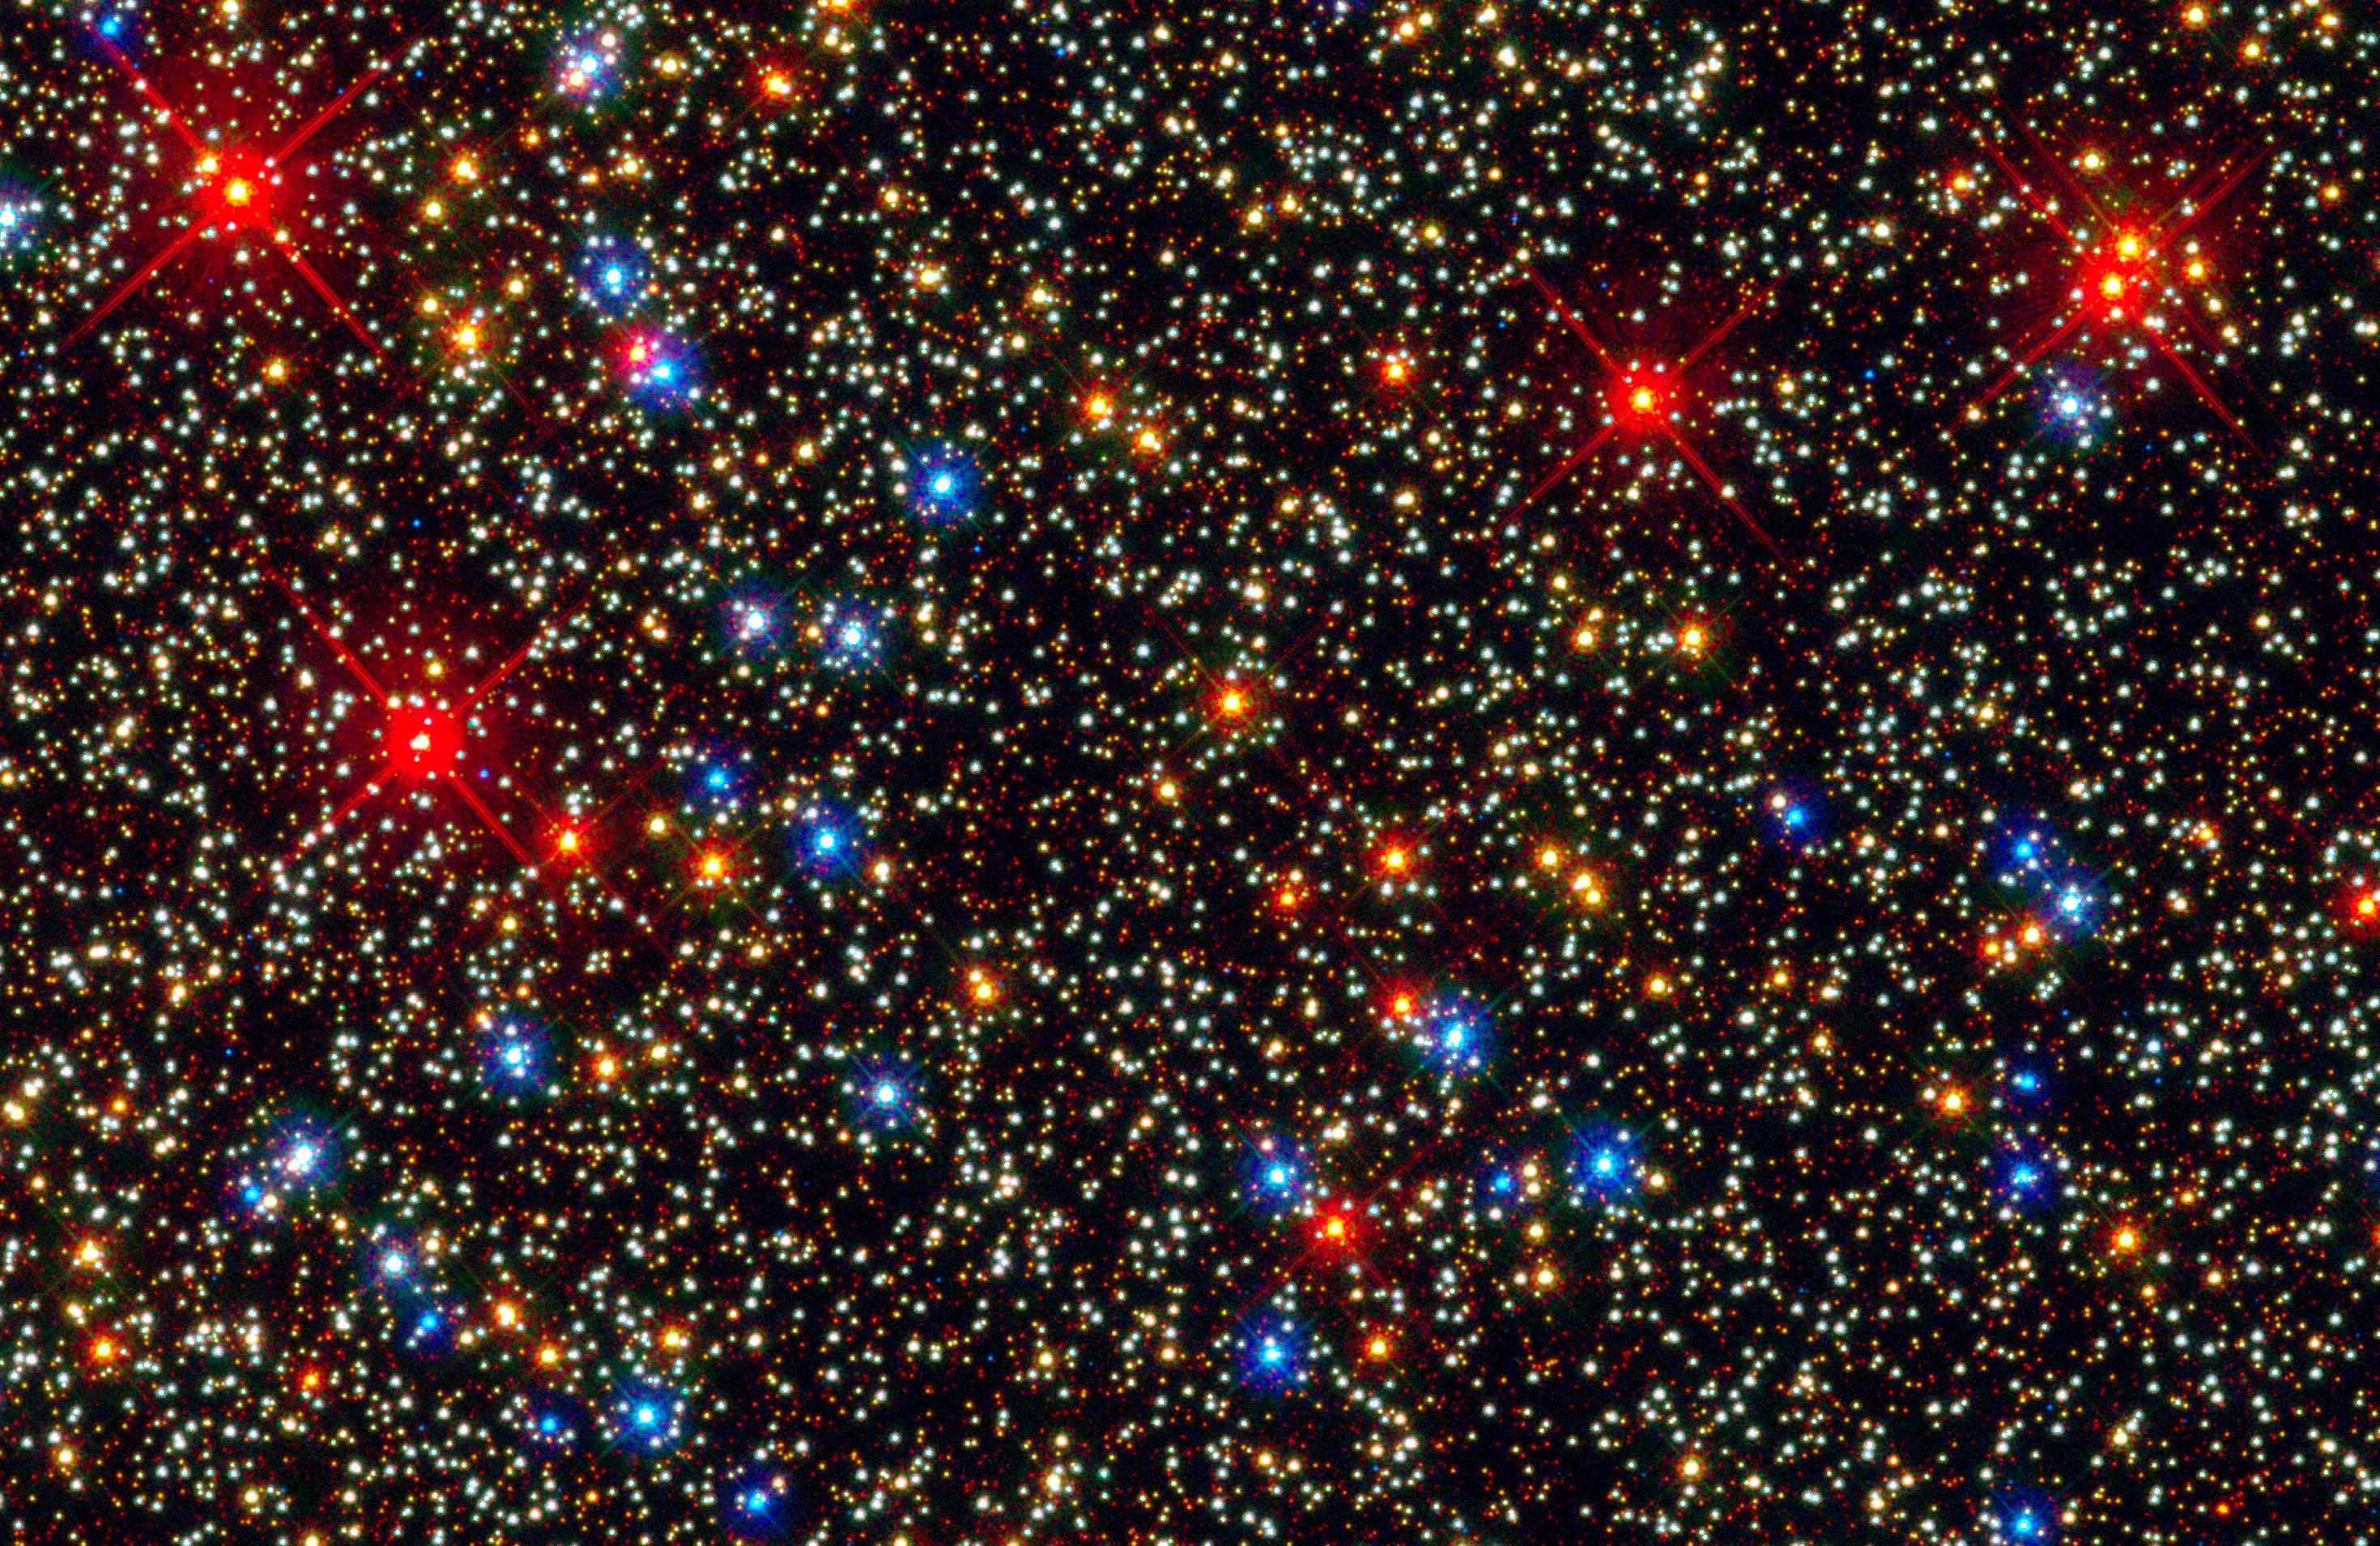 An image of Omega Centauri